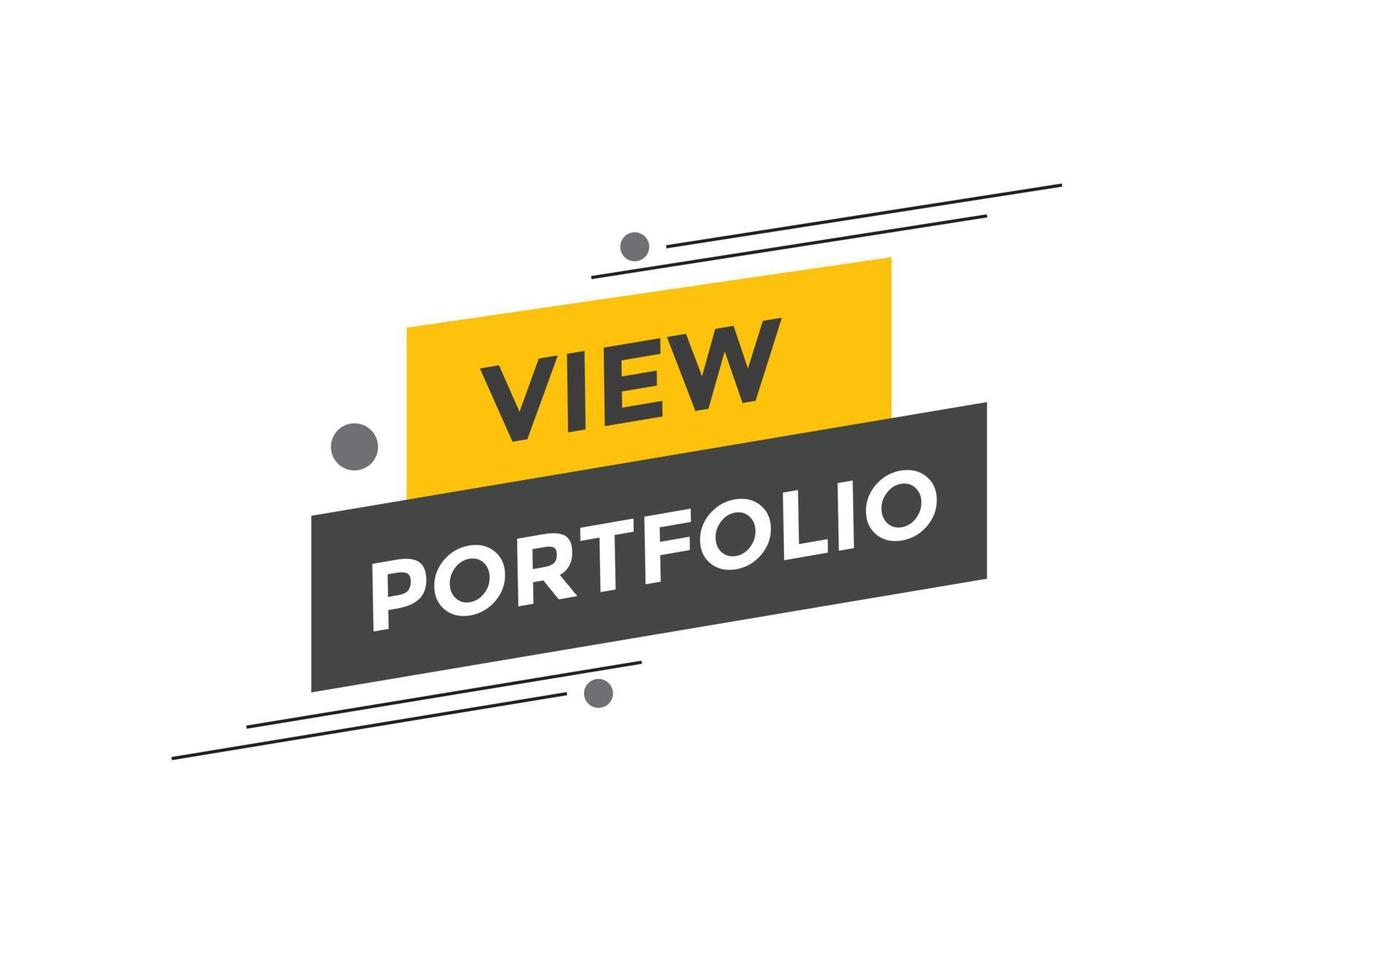 View portfolio button. speech bubble. View portfolio web banner template. Vector Illustration.